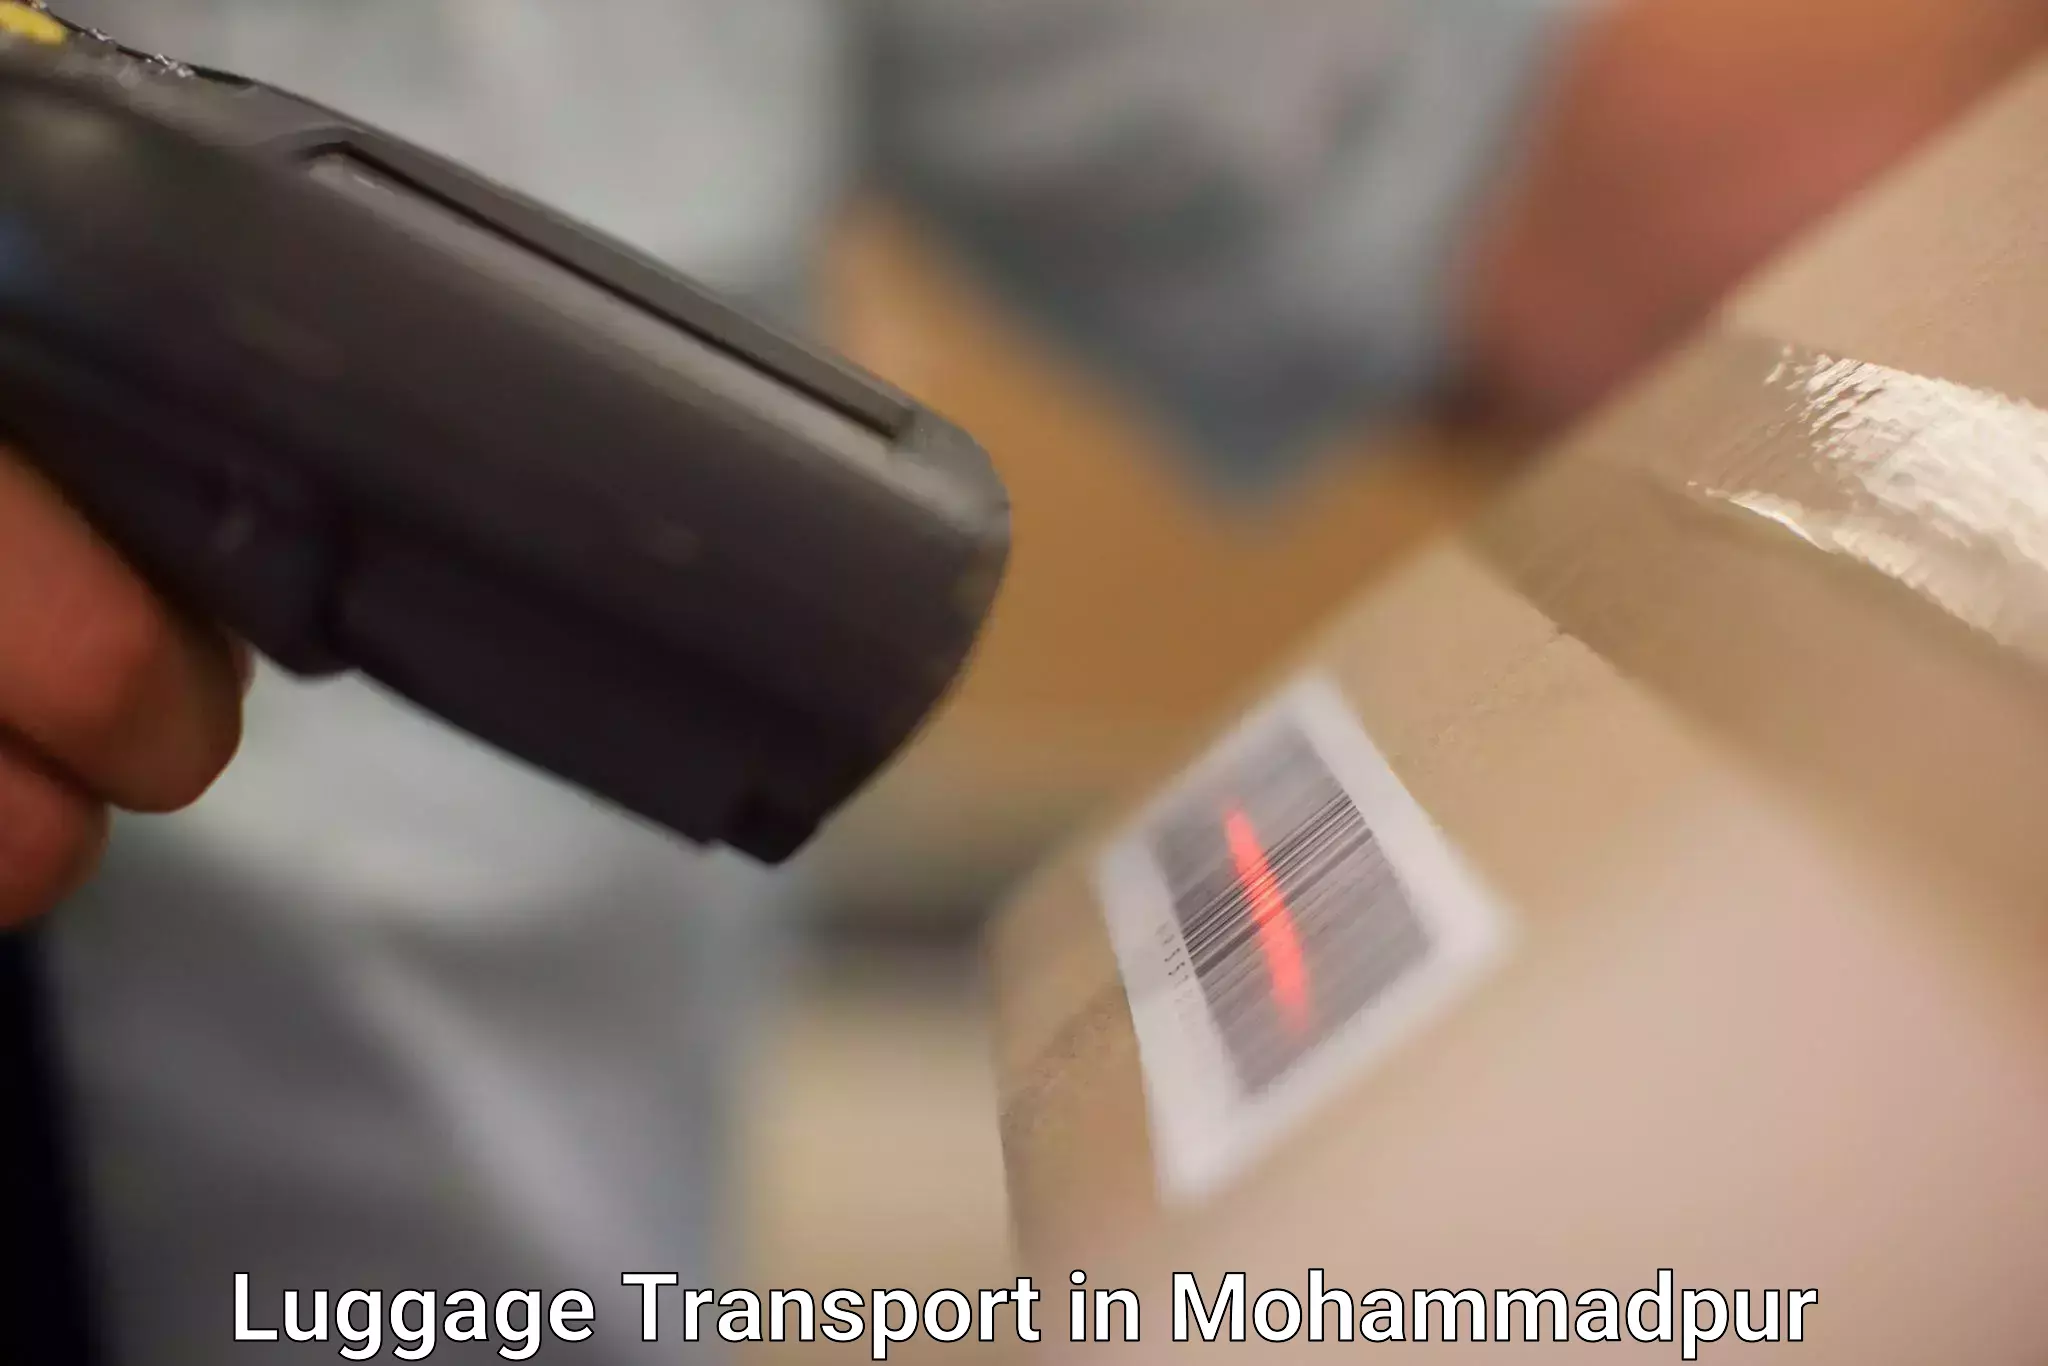 Corporate baggage transport in Mohammadpur